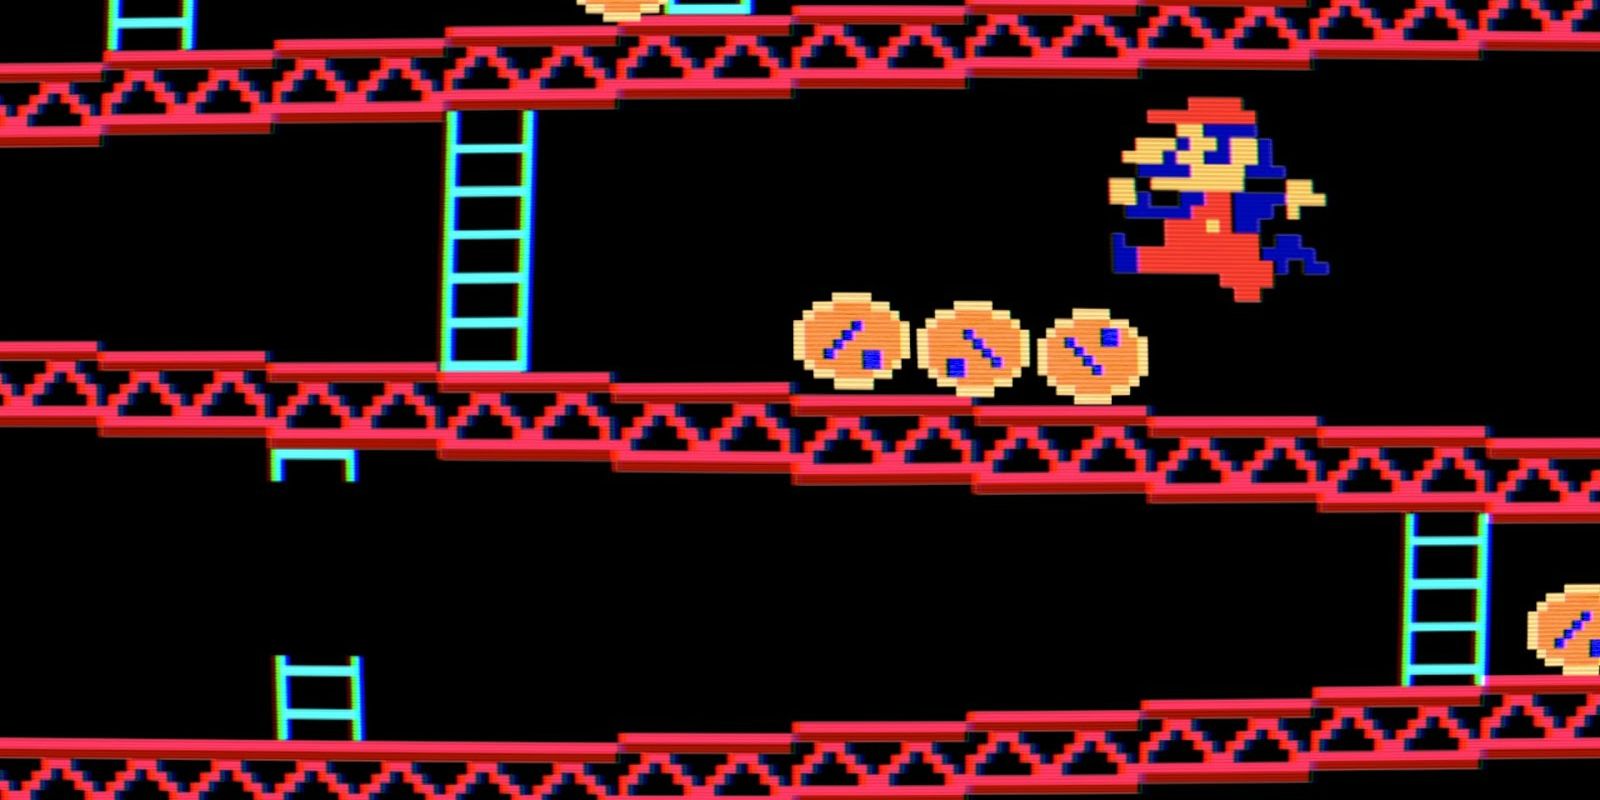 Mario jumping over barrels in Donkey Kong